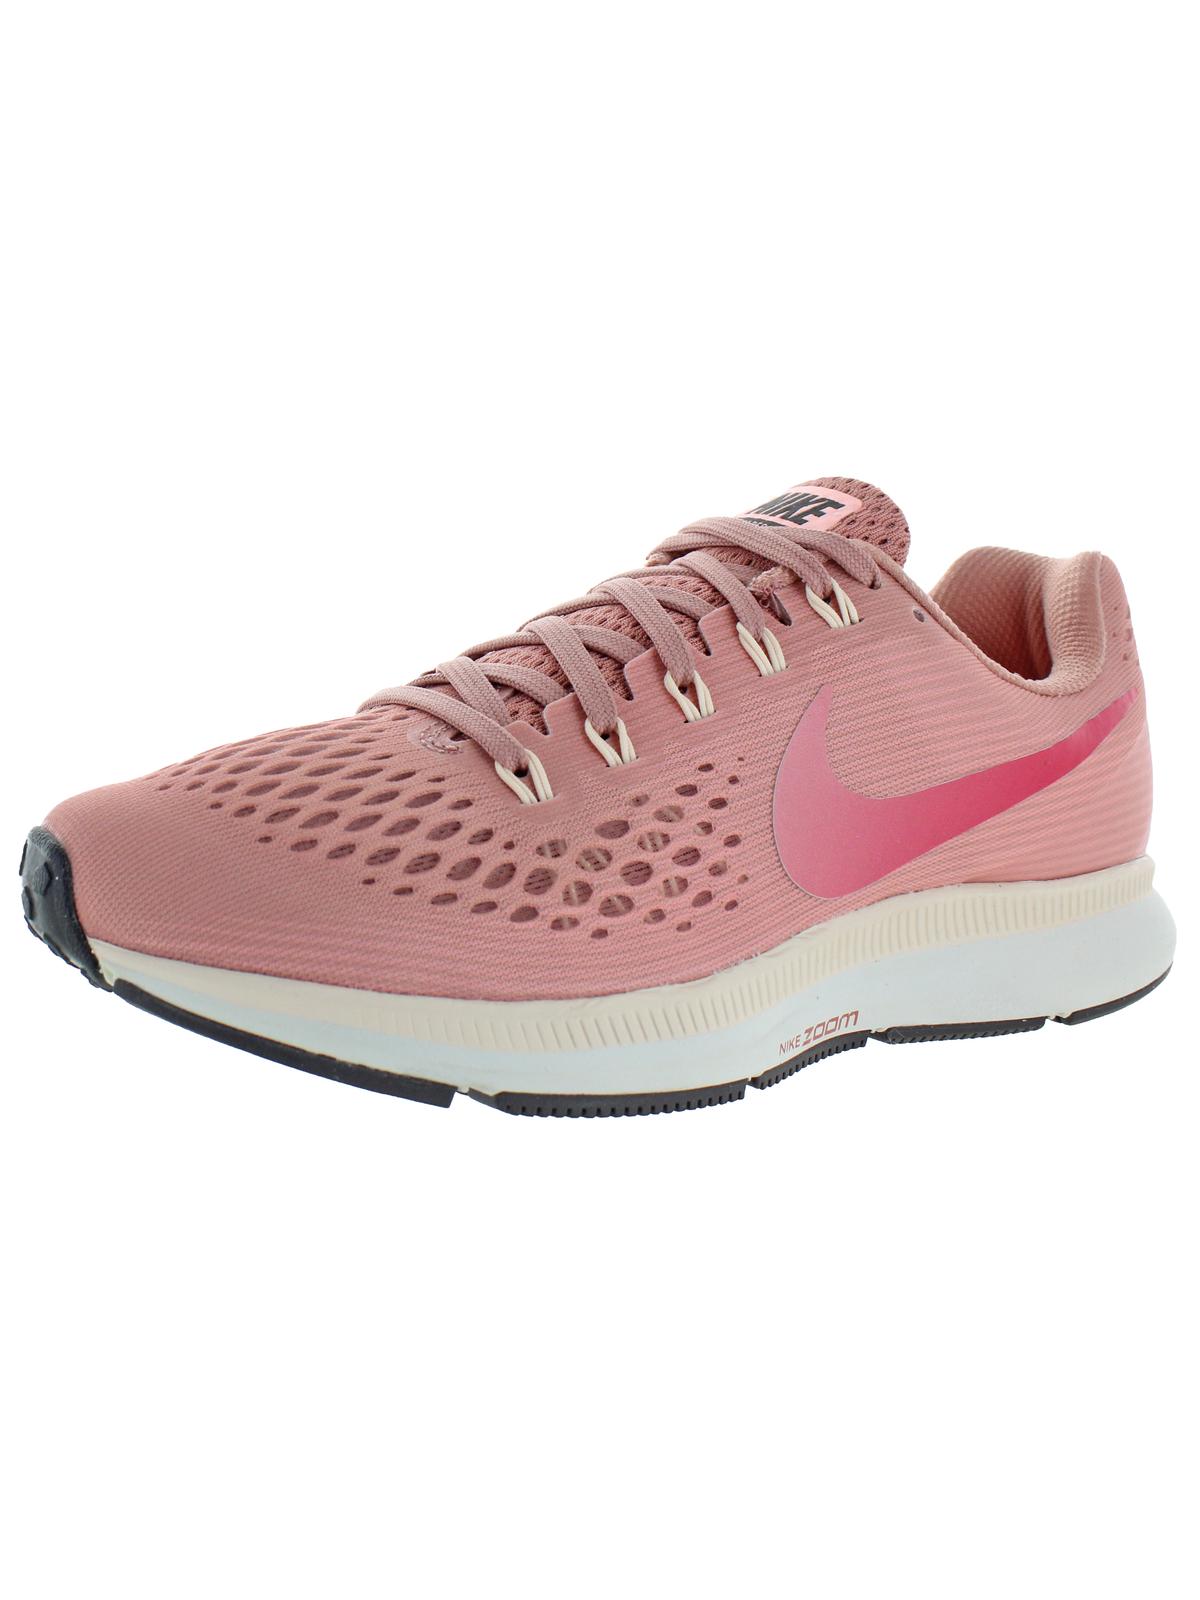 Nike Womens Air Zoom Pegasus 34 Mesh Low Top Running Shoes - image 1 of 2